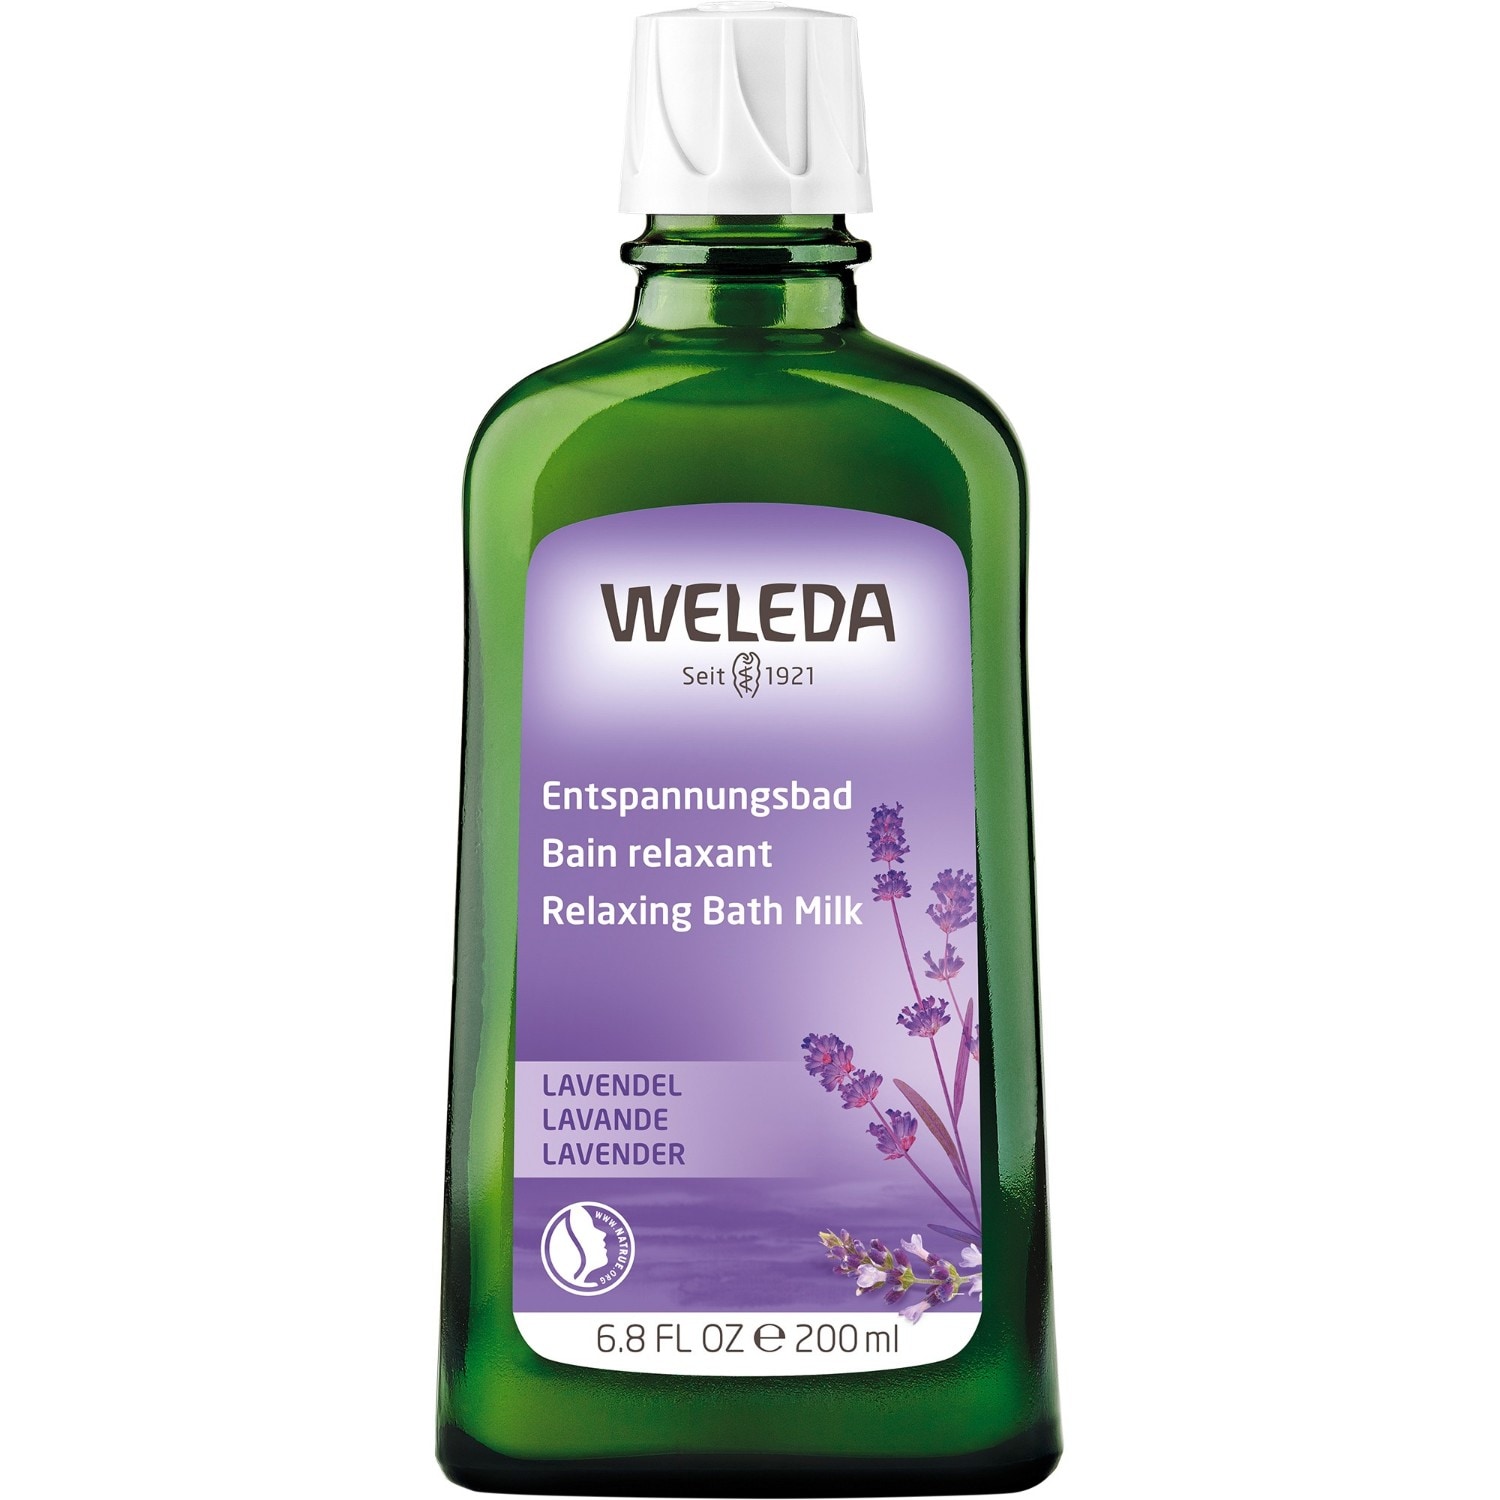 WELEDA Lavender Relaxation bath